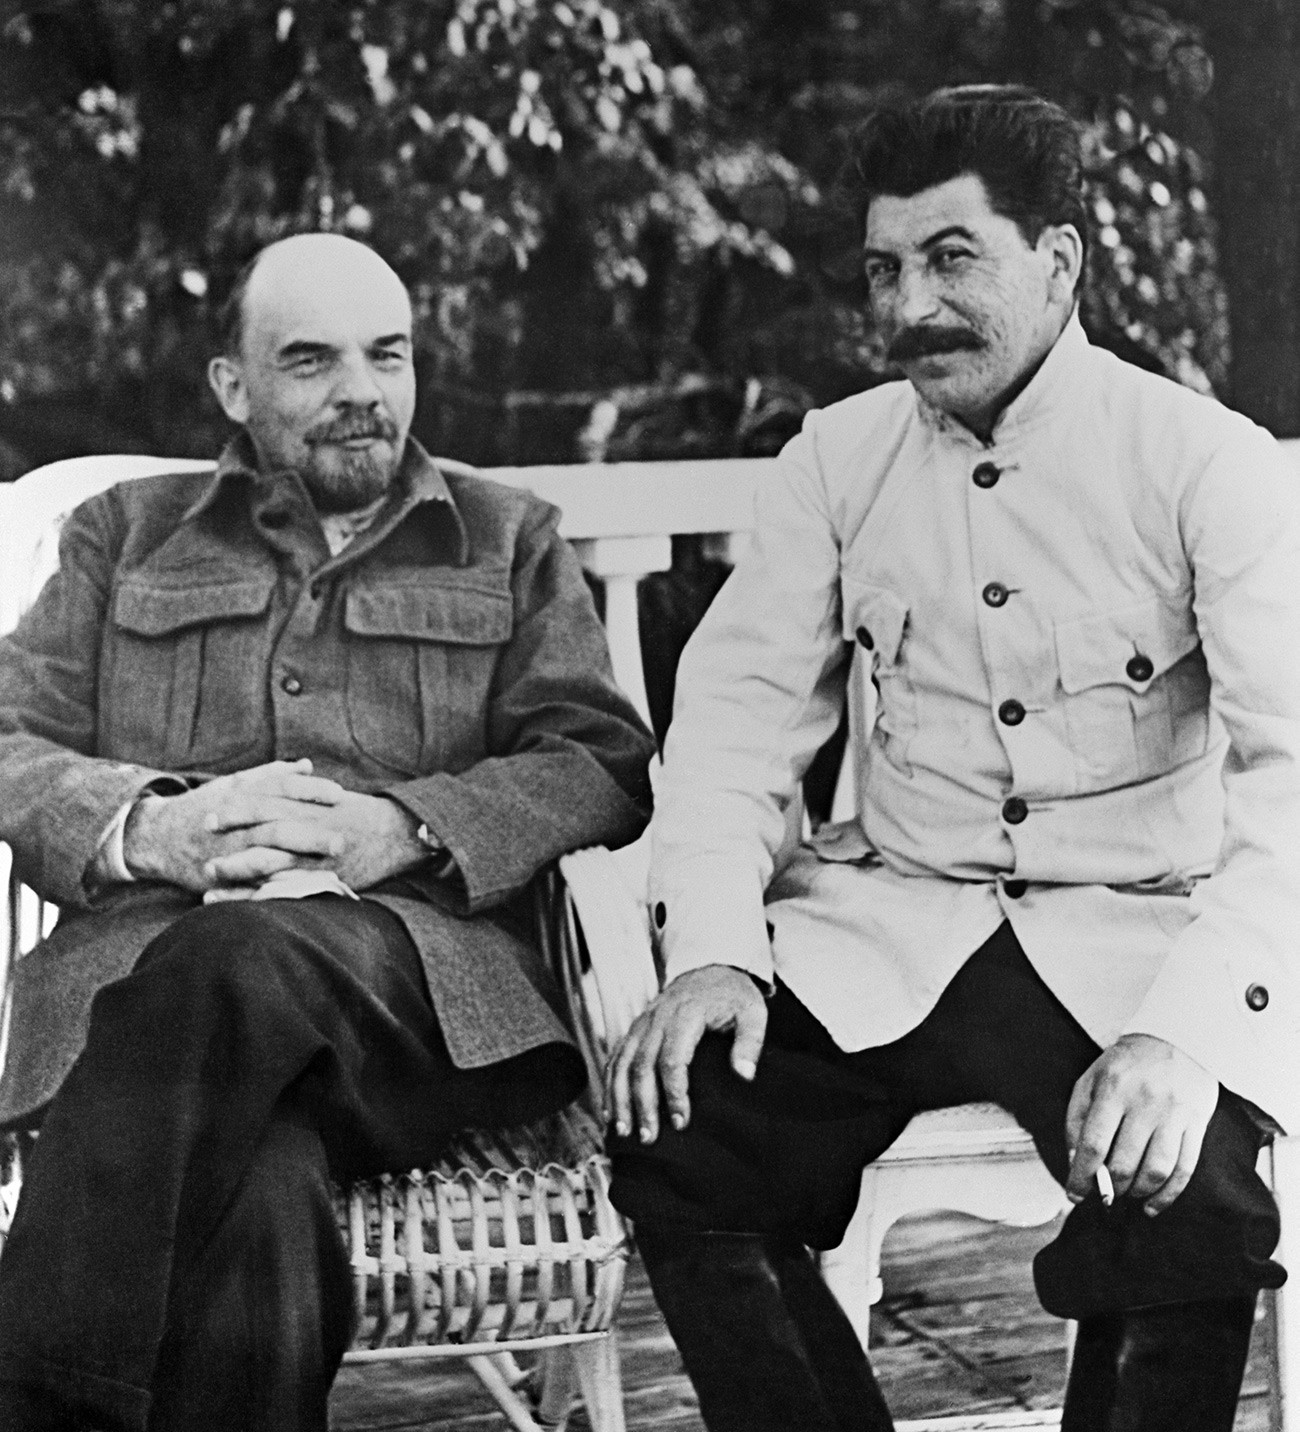 Joseph Stalin and Vladimir Lenin in the countryside.